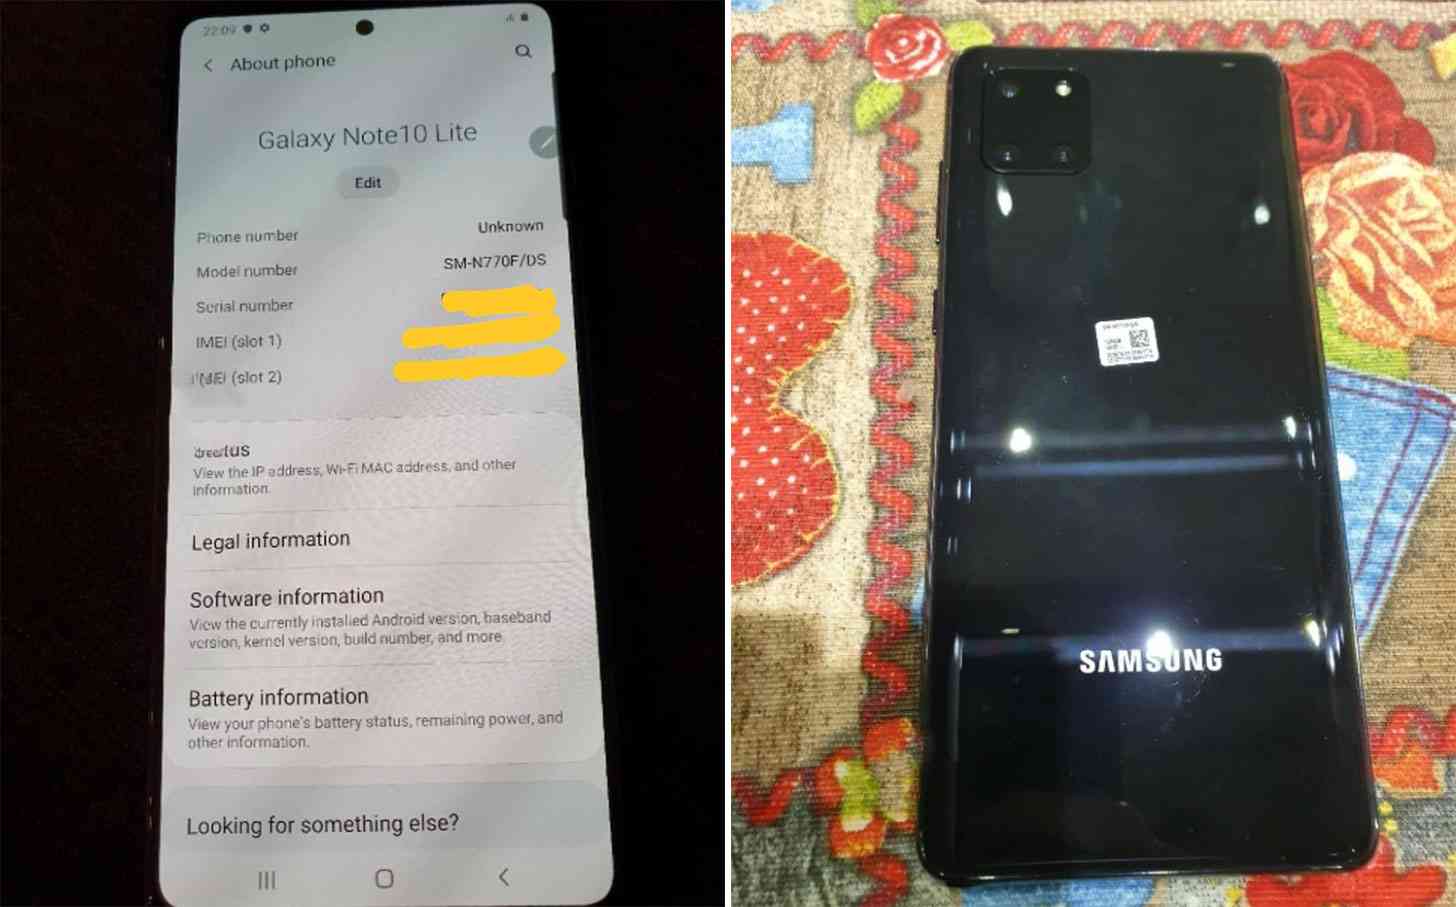 Galaxy Note 10 Lite images leak